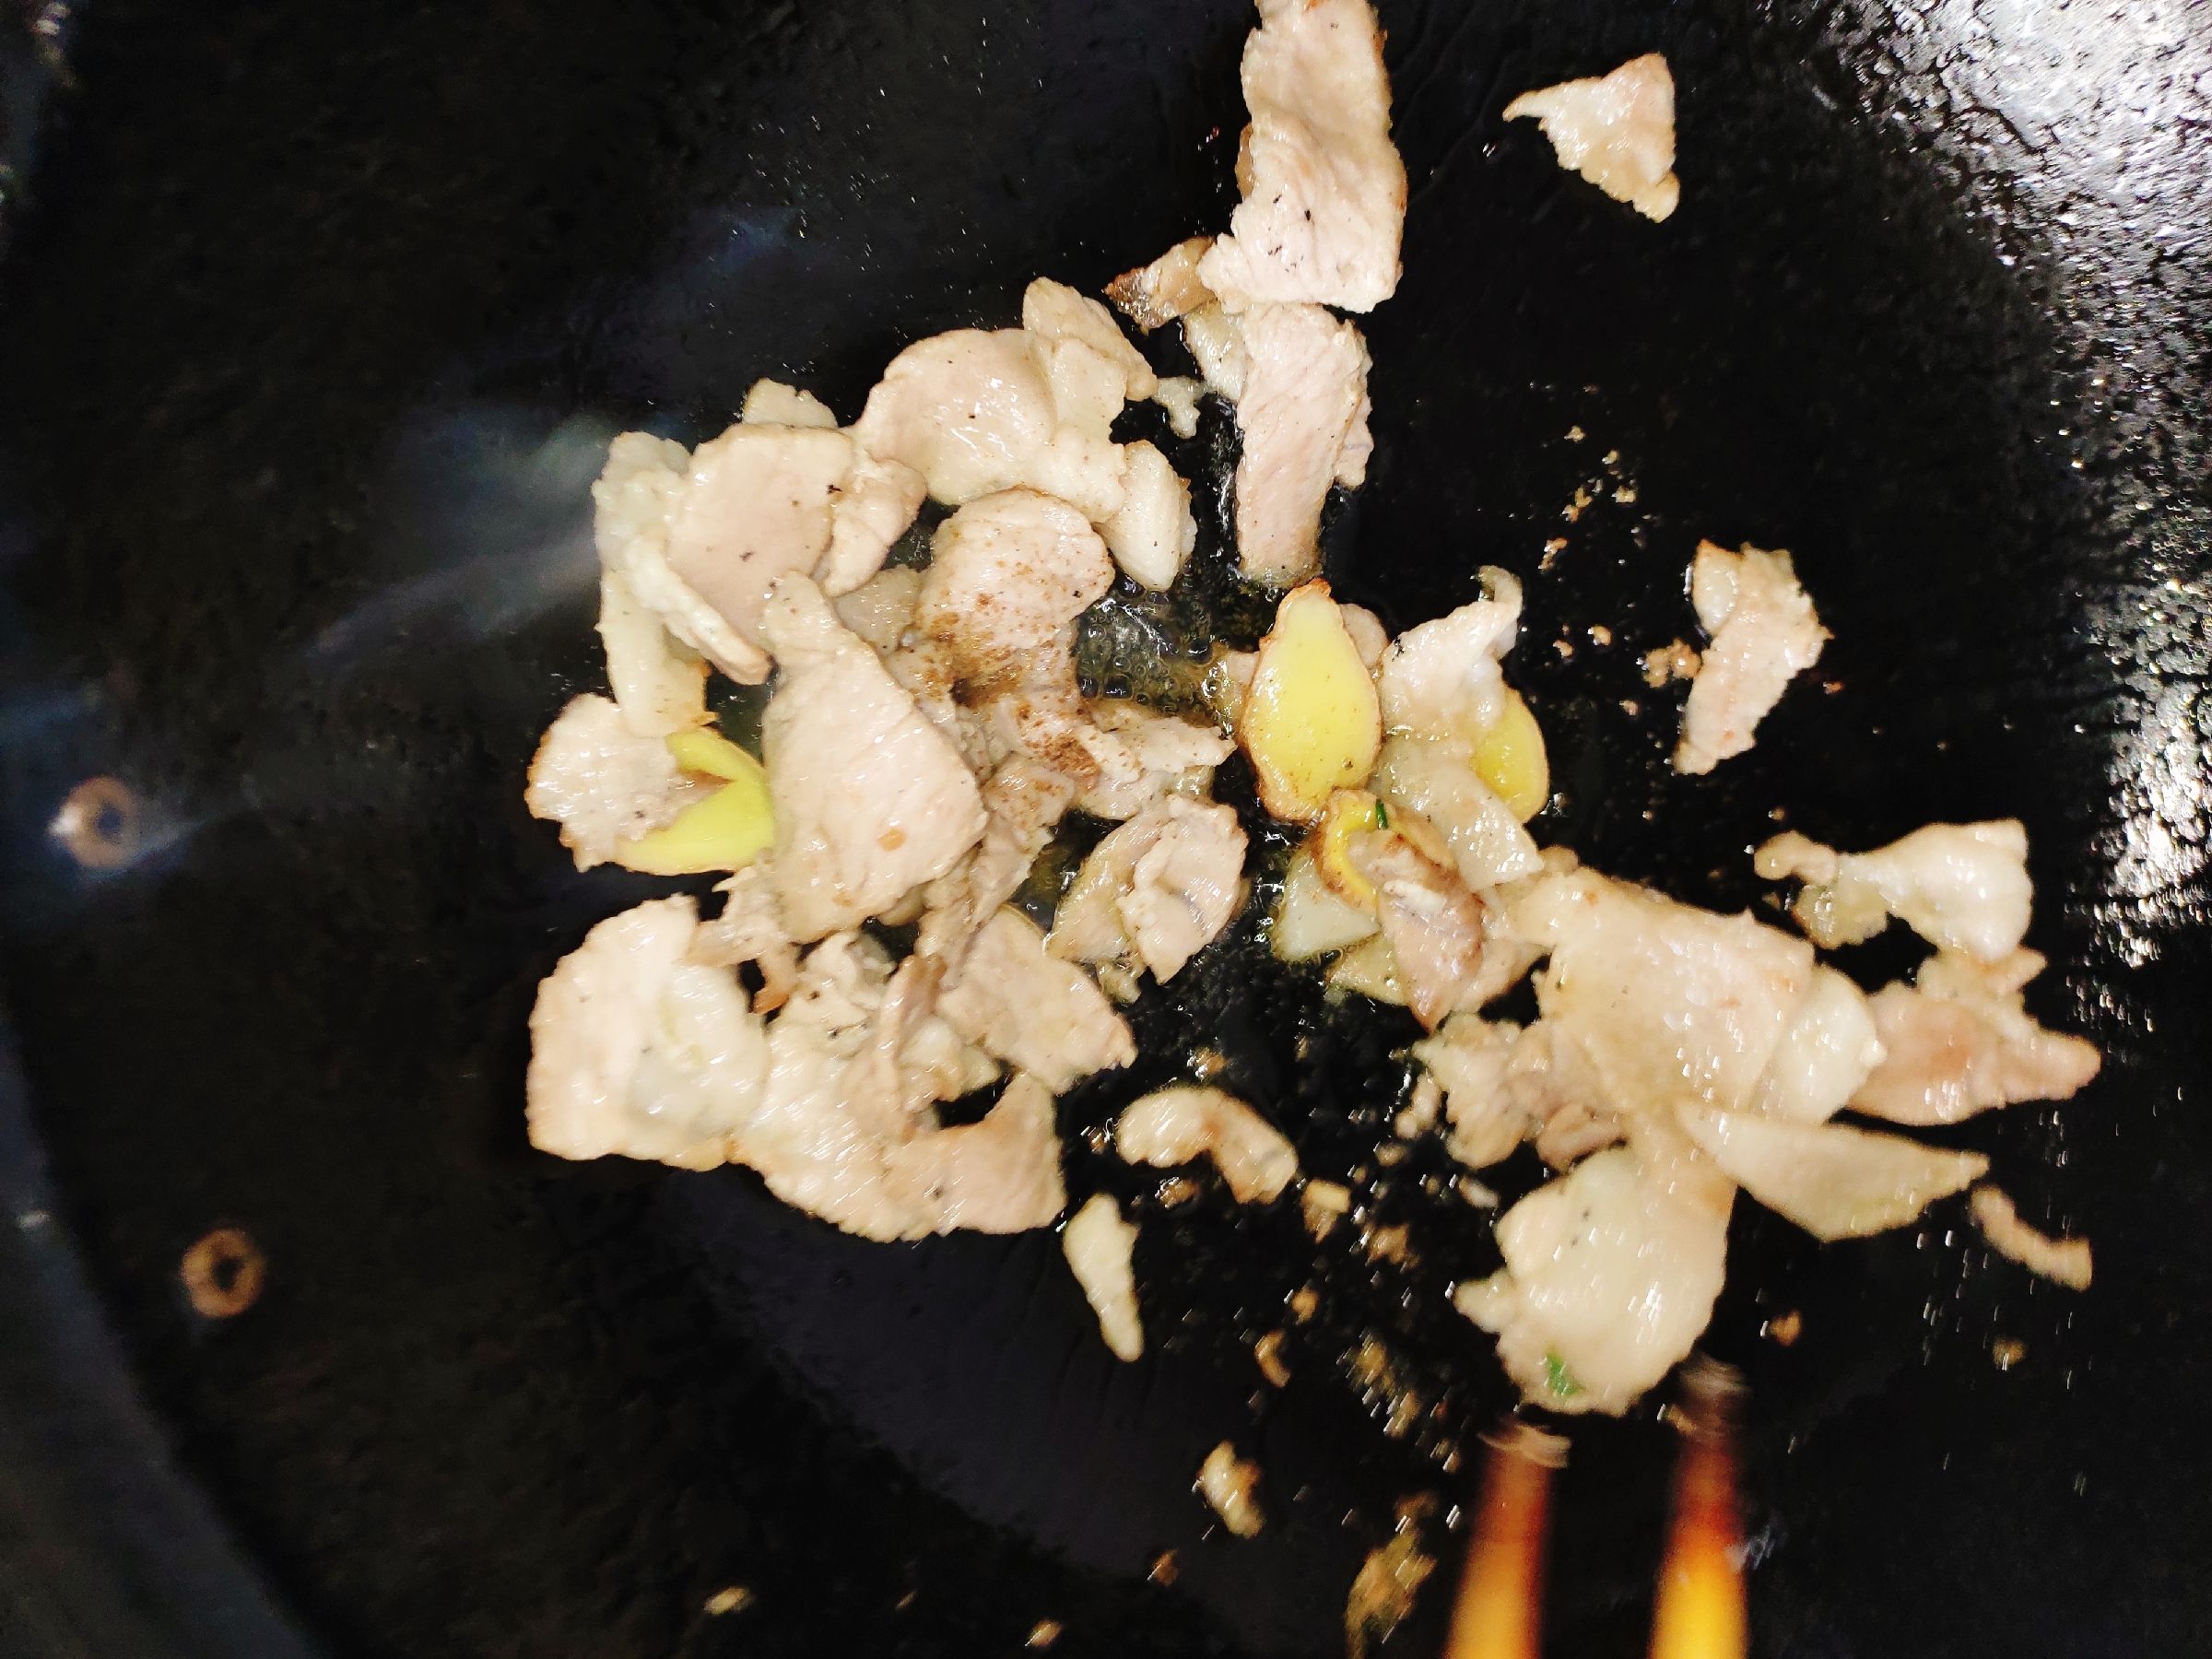 Stir-fried Pork with Garlic Sprouts recipe